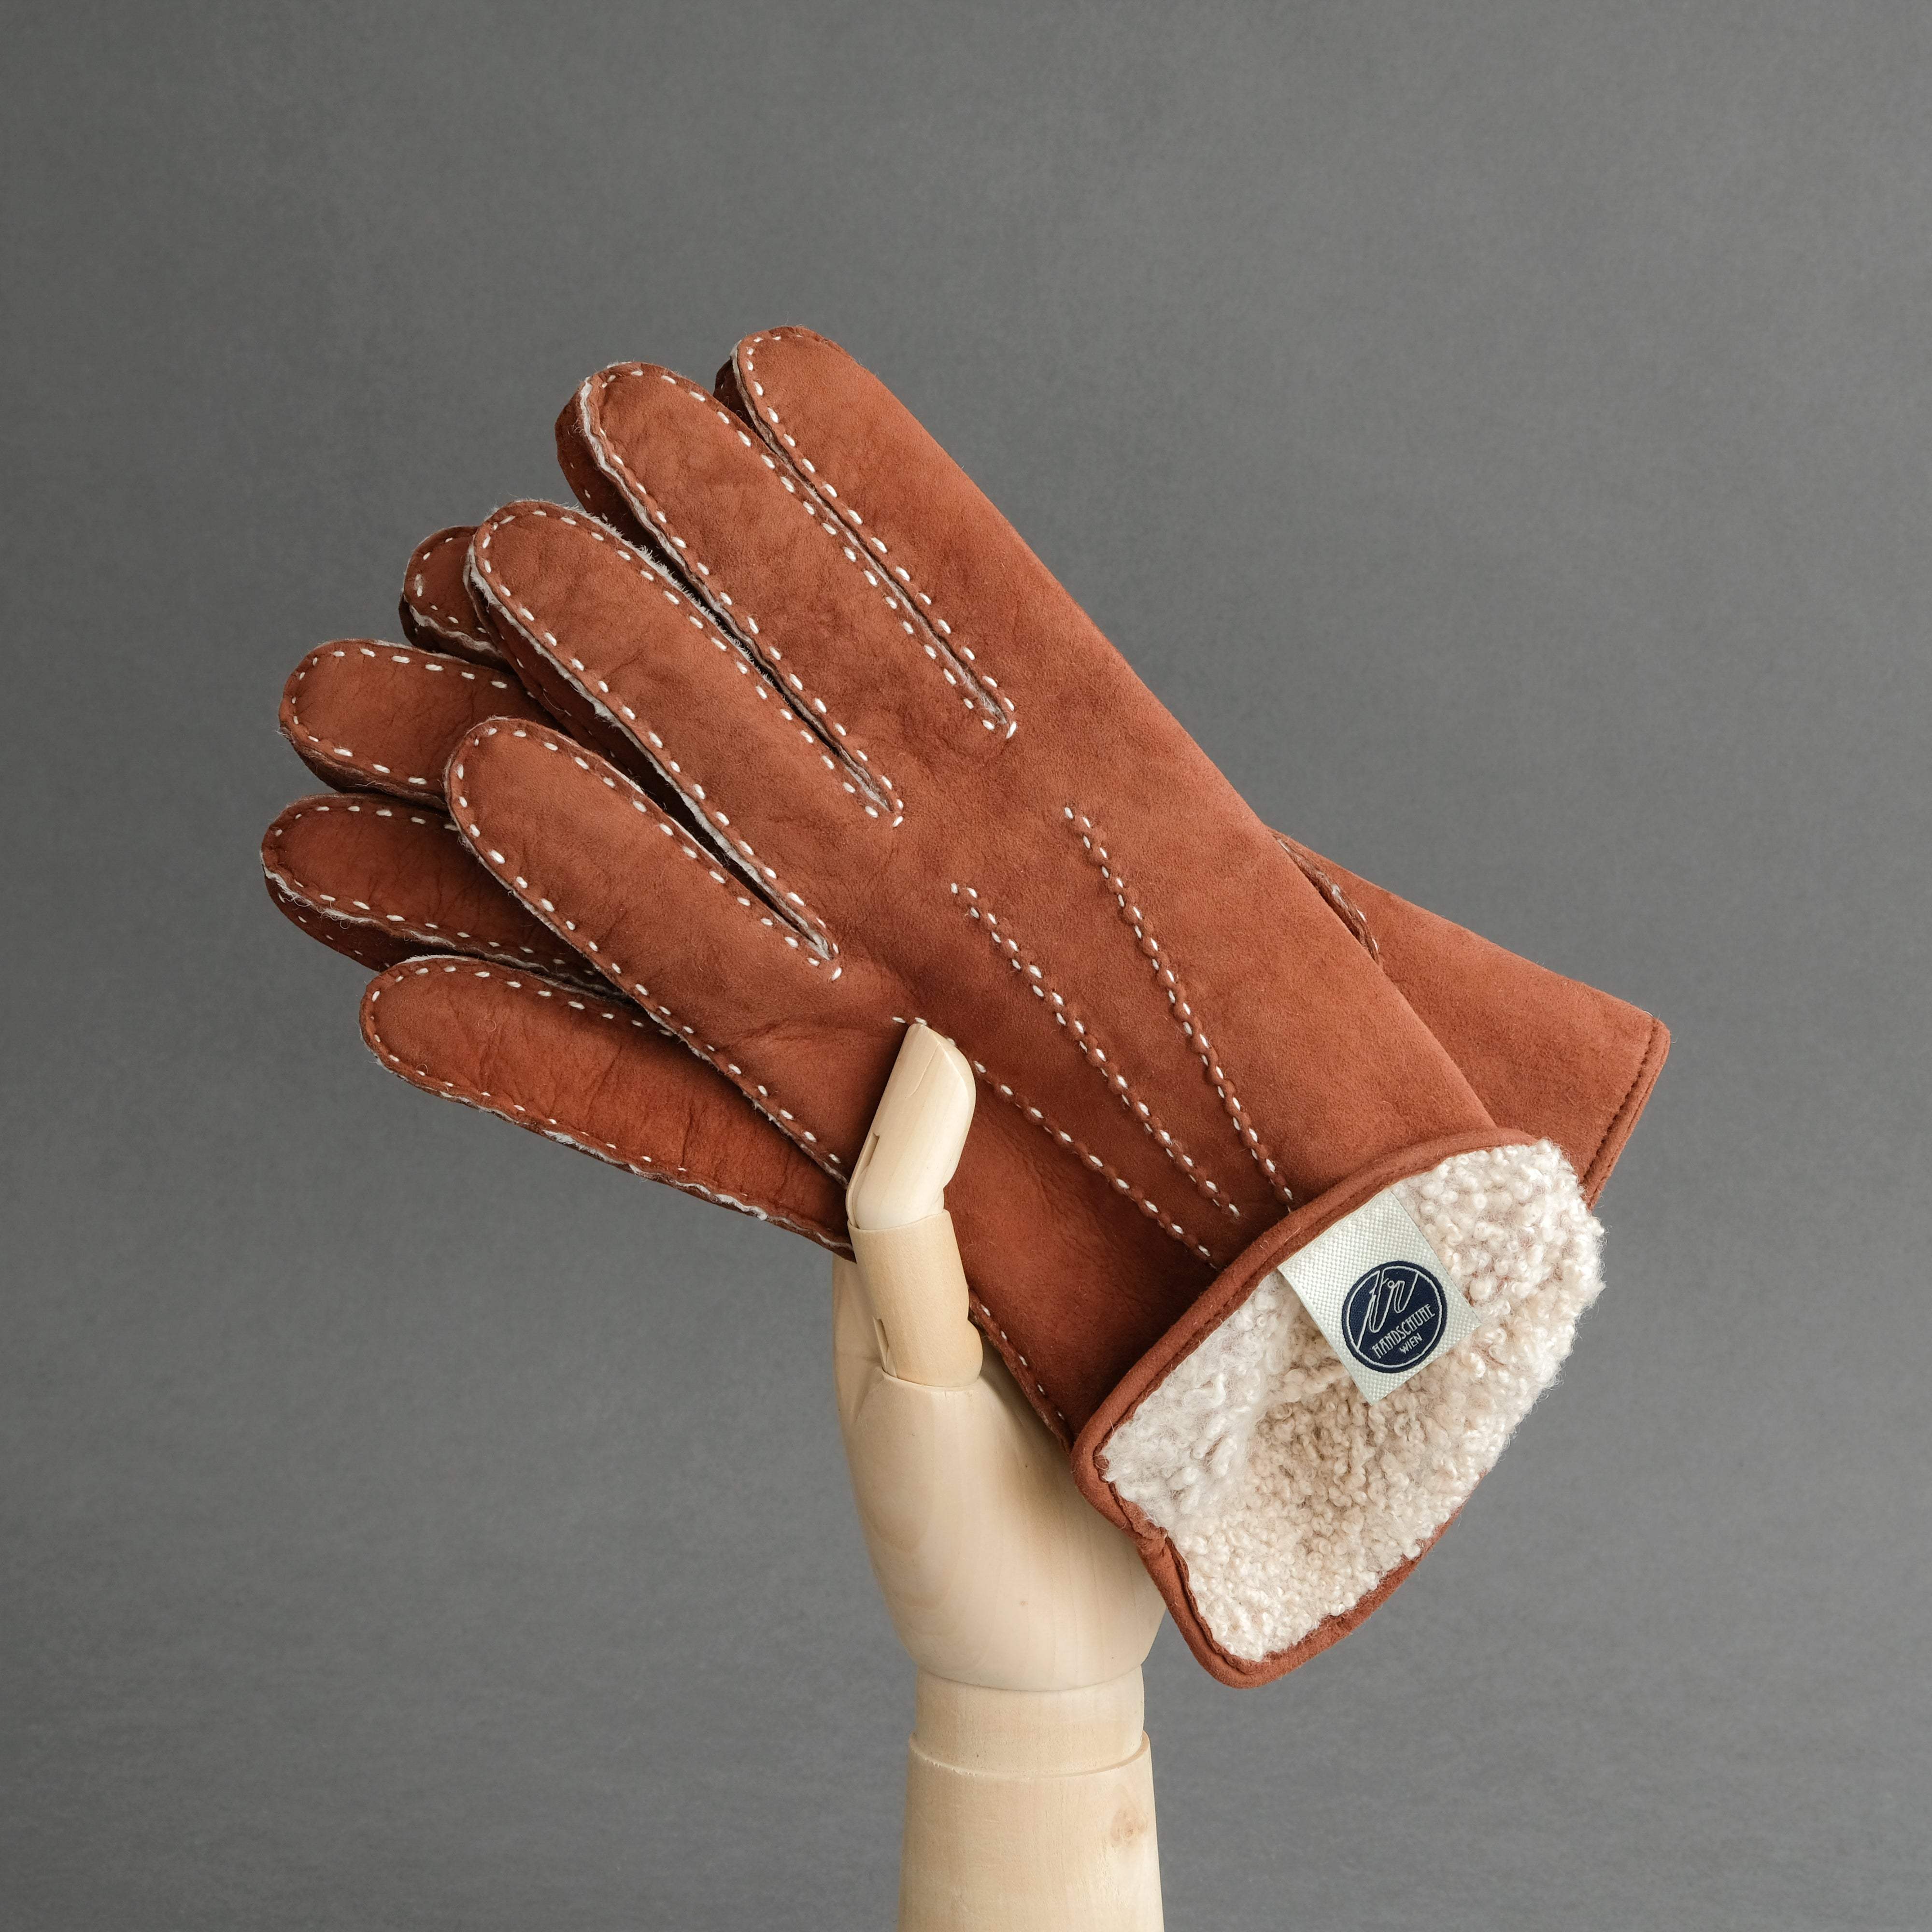 Gentlemen's Hand Sewn Gloves From Rust Curly Lambskin - TR Handschuhe Wien - Thomas Riemer Handmade Gloves